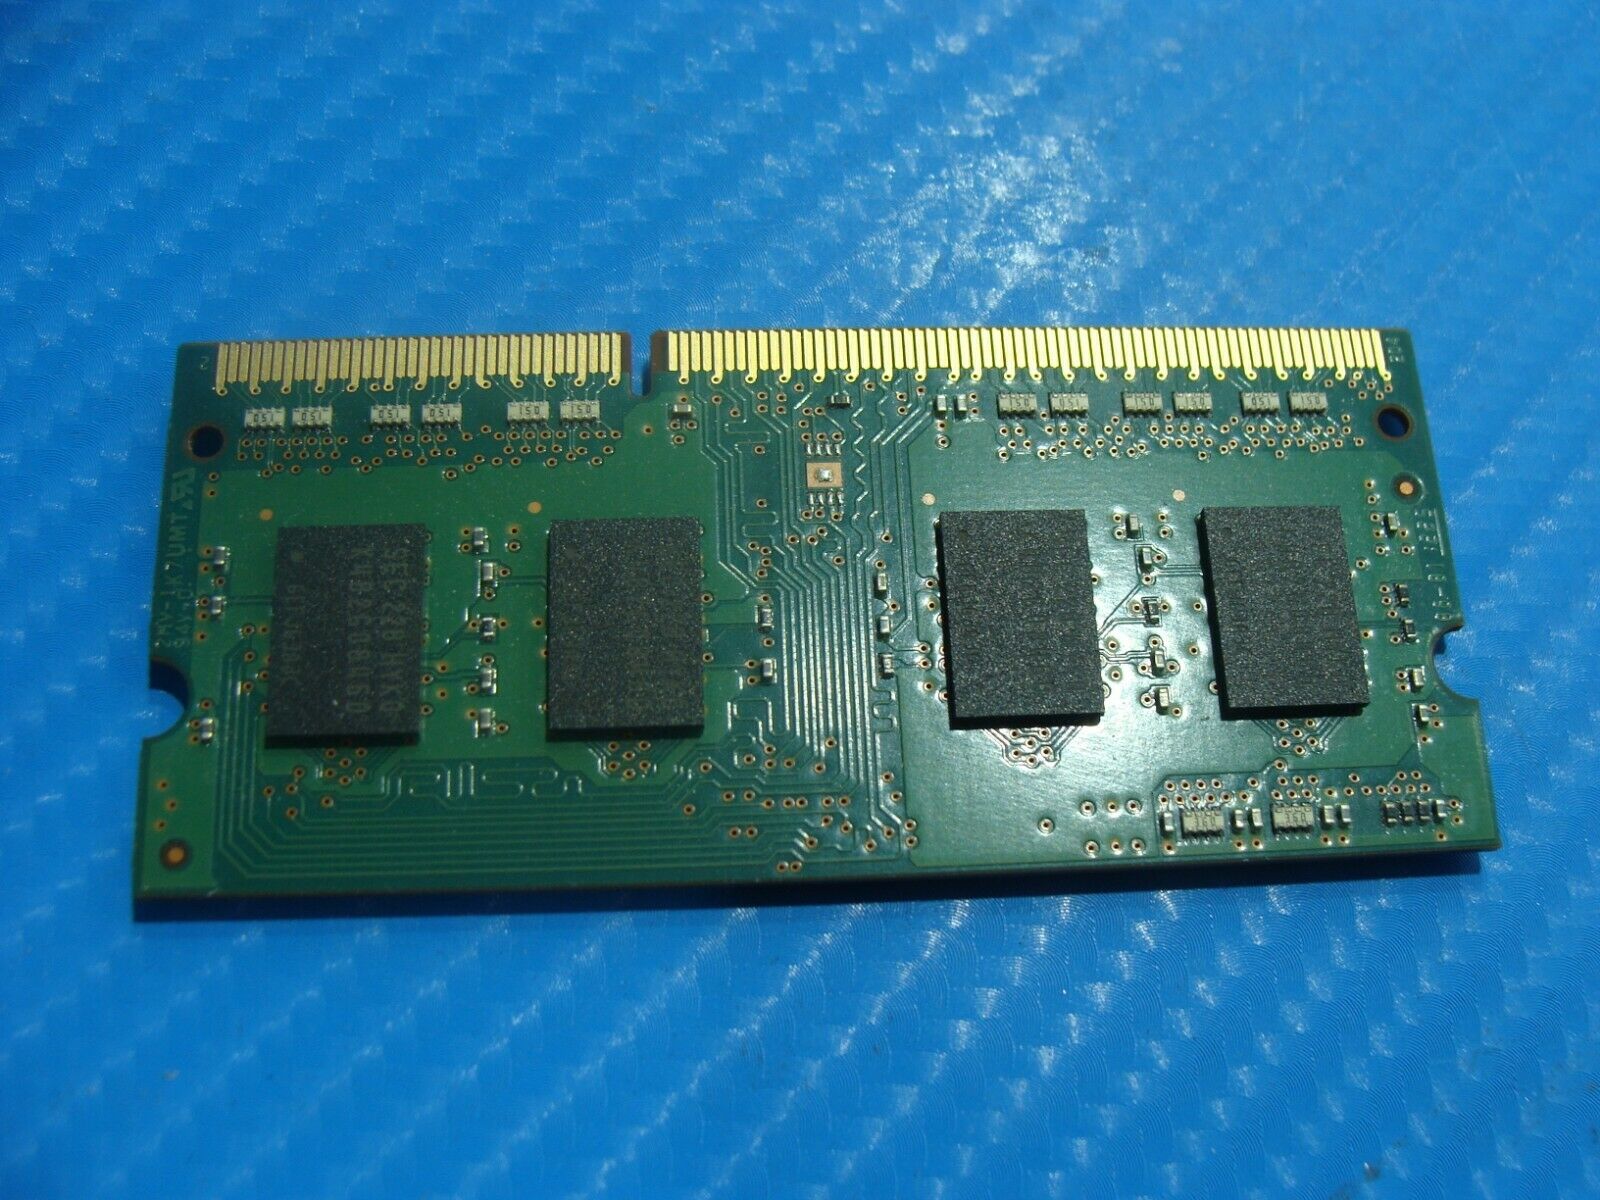 Sony SVT14126CXS Samsung 2Gb Memory Ram So-Dimm pc3l-12800s m471b5773dh0-yk0 